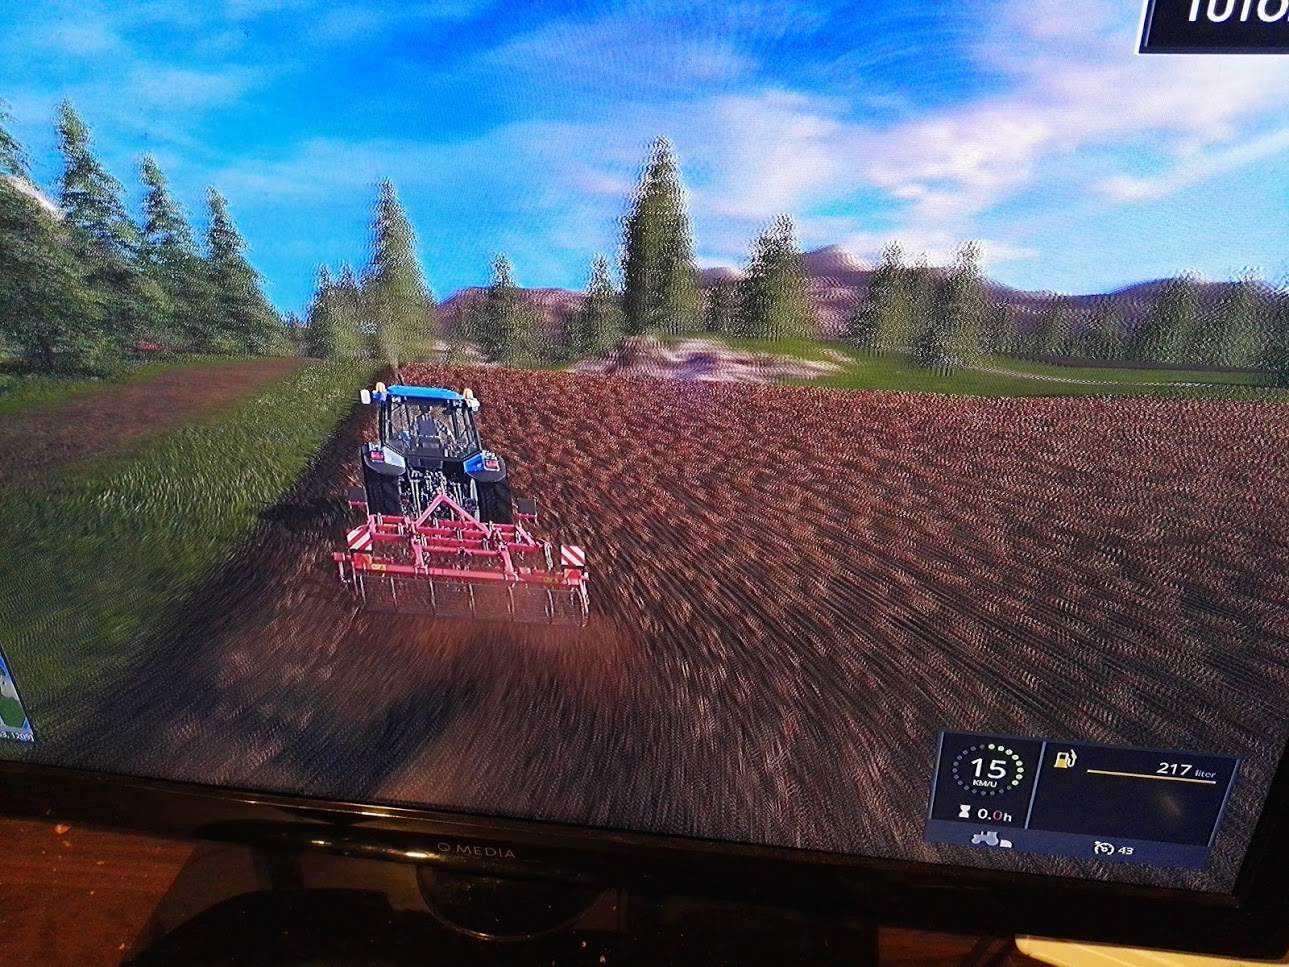 download farming simulator13 for free